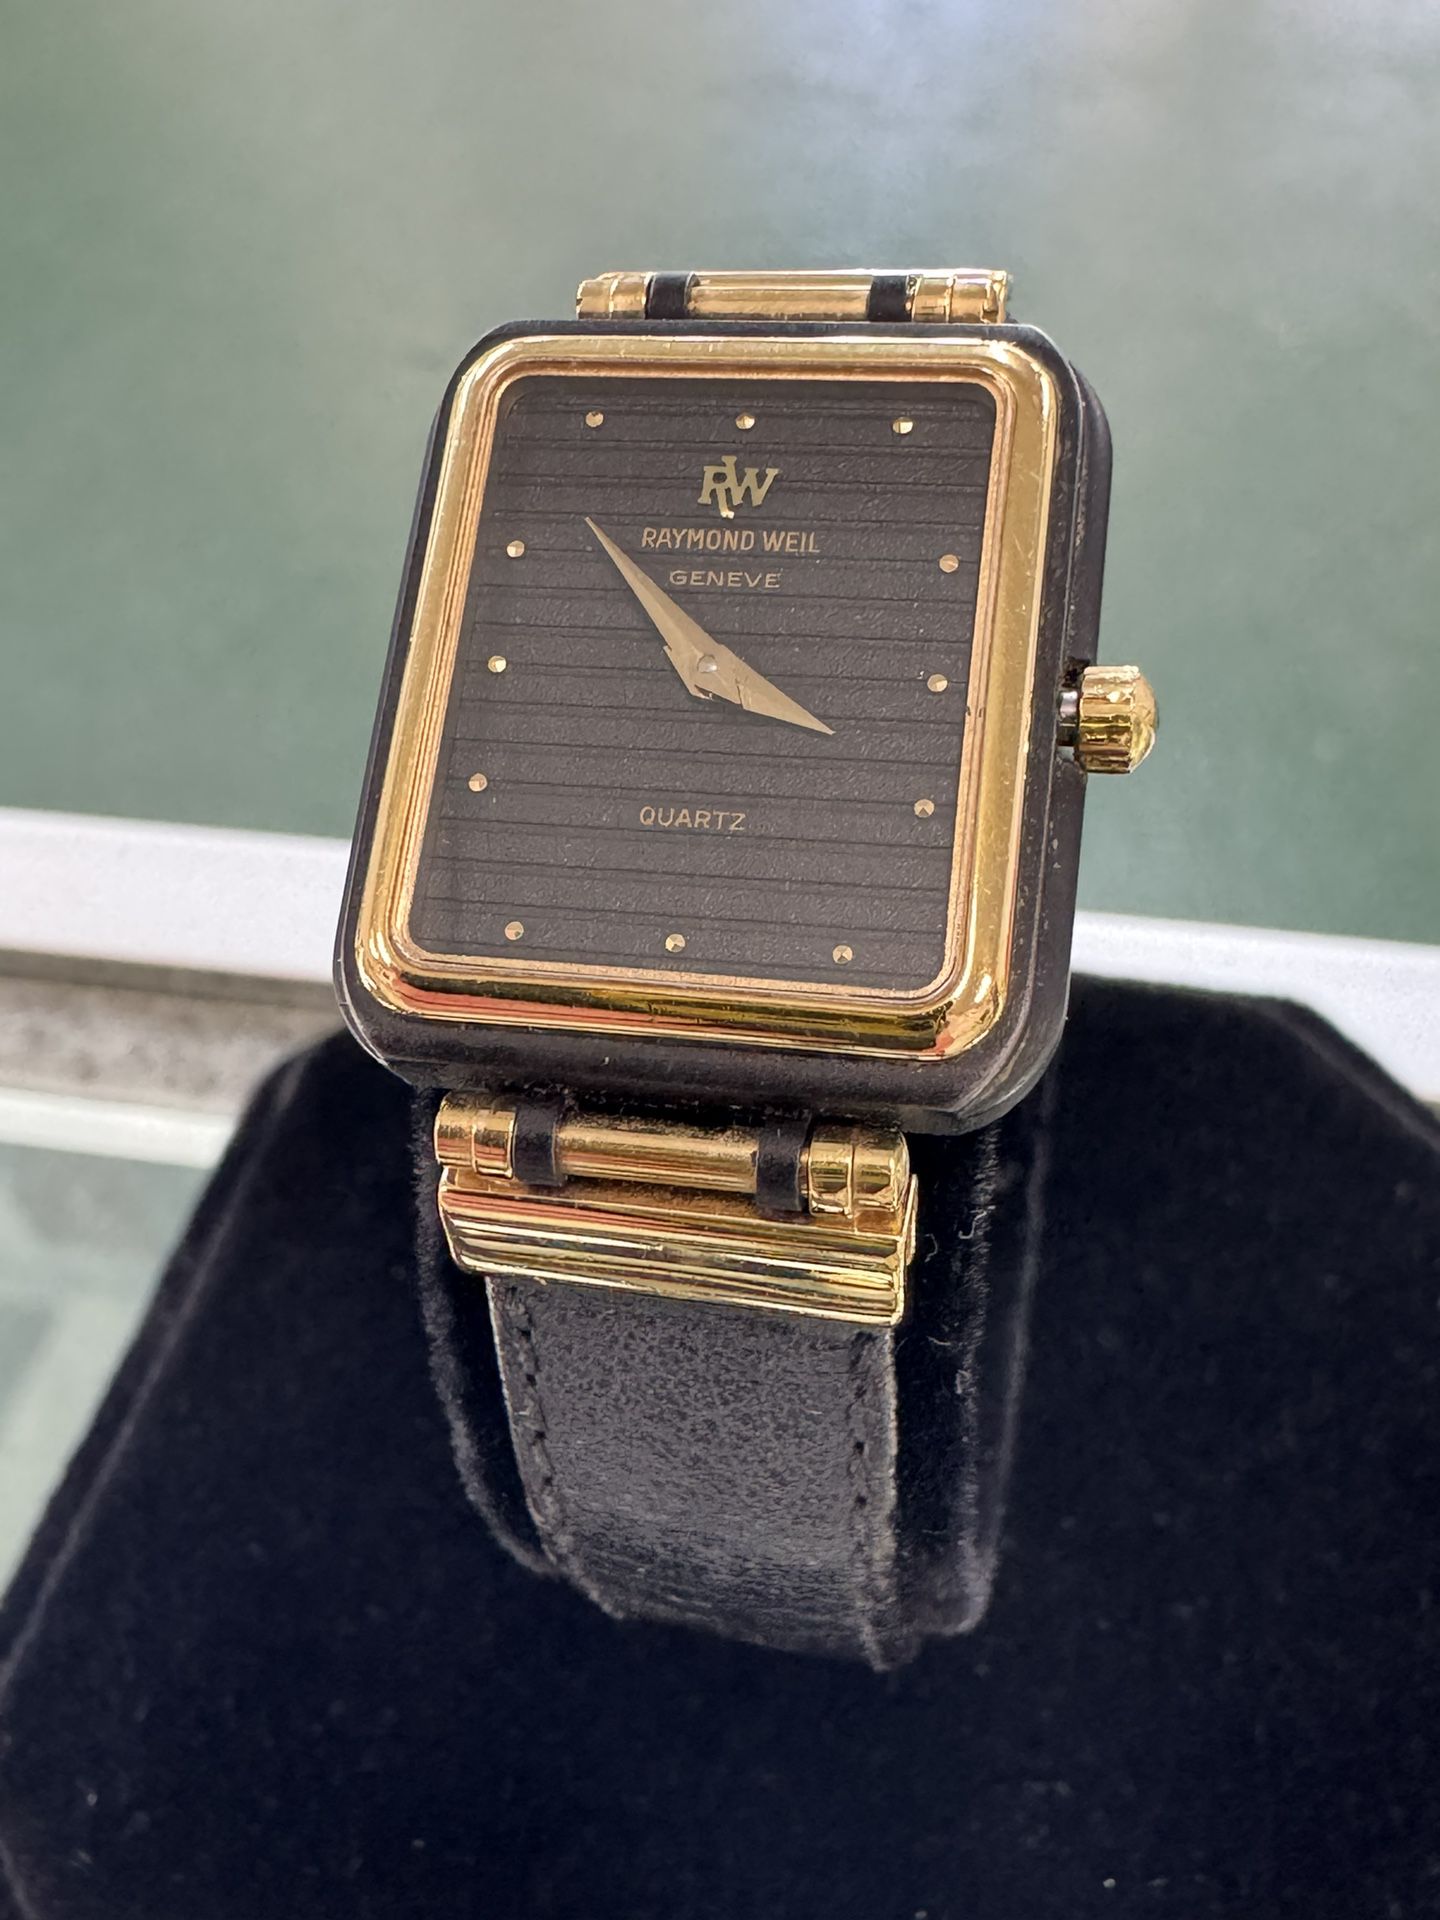 Raymond Weil Geneve Quartz 8083 10M 18K Gold Plated Ladies Wrist Watch